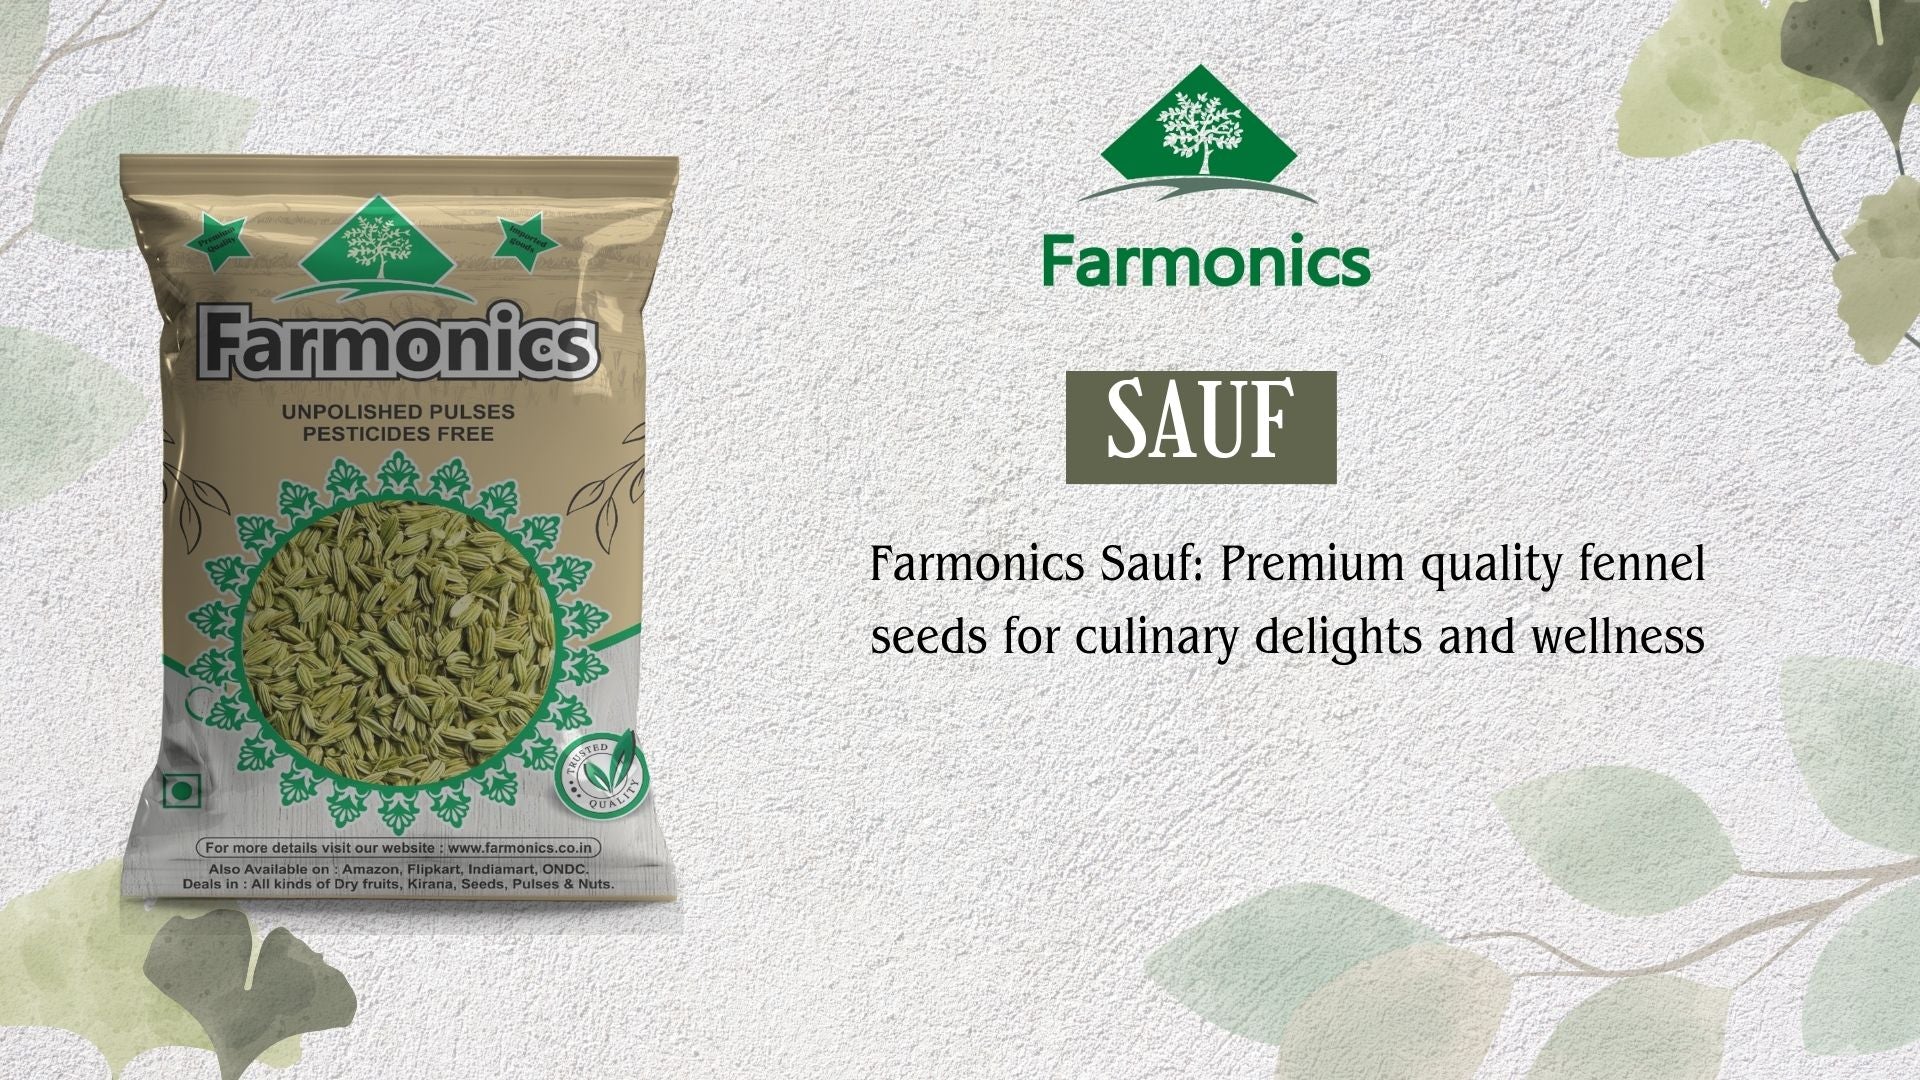 Farmonics Premium quality sauf seeds for culinary delights and wellnes